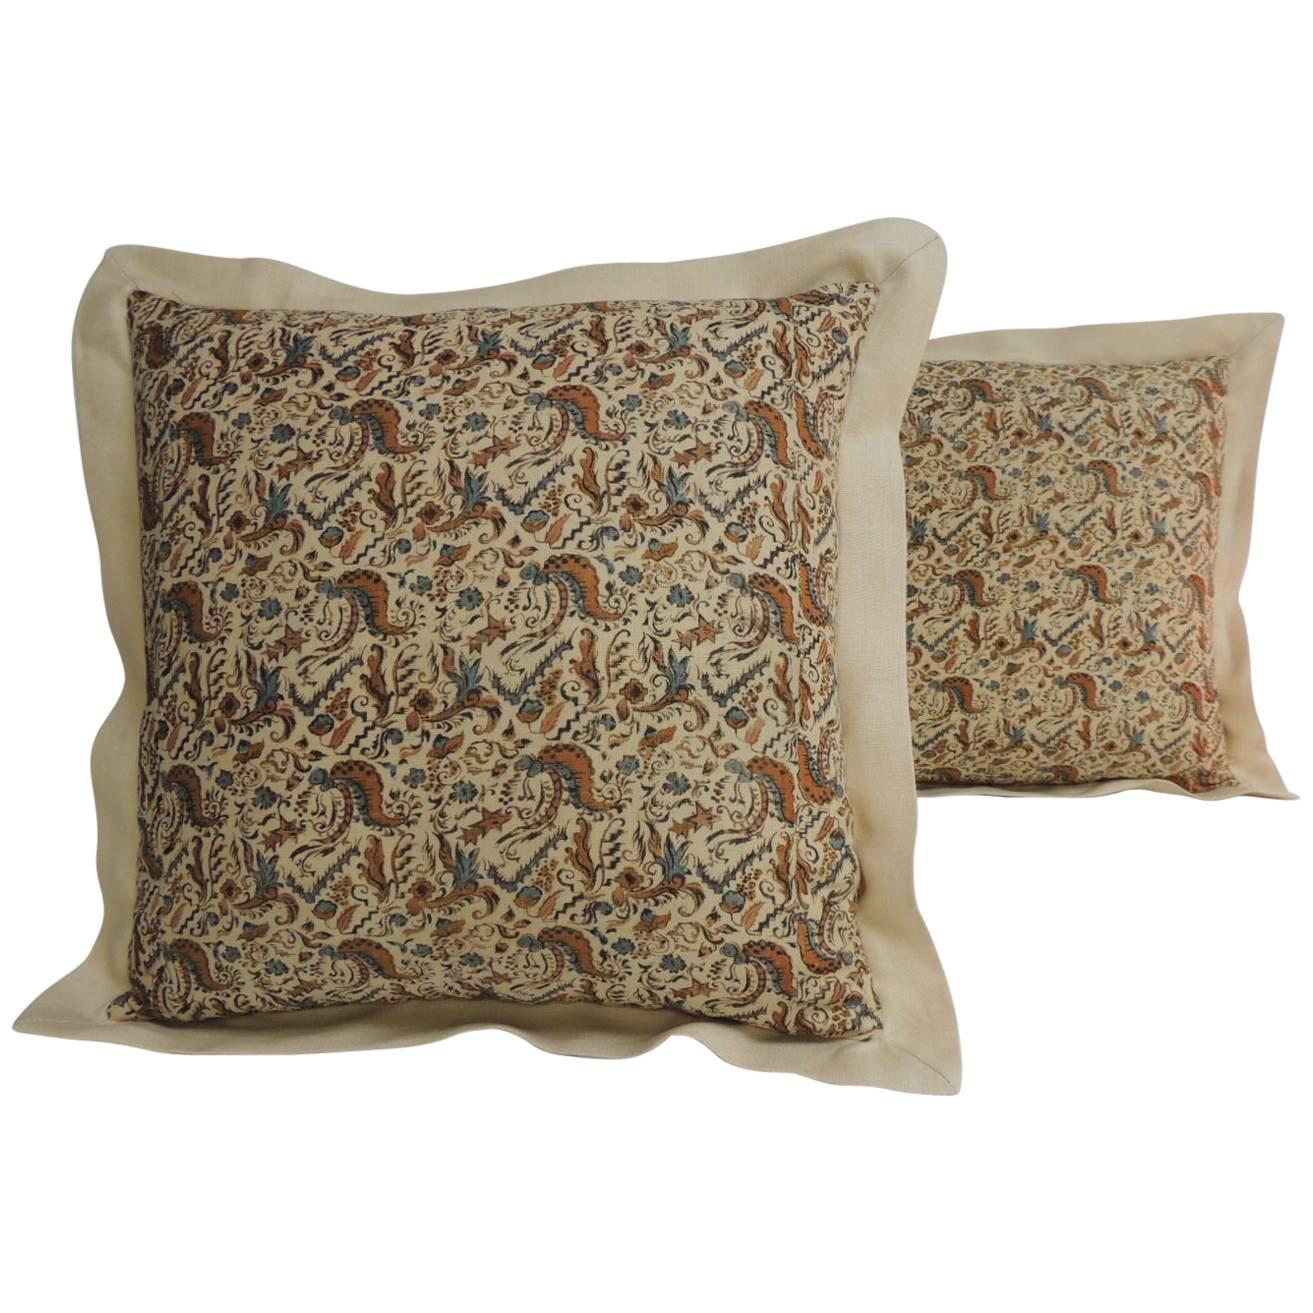 Pair of 19th Century Arts & Crafts Square Decorative Pillows